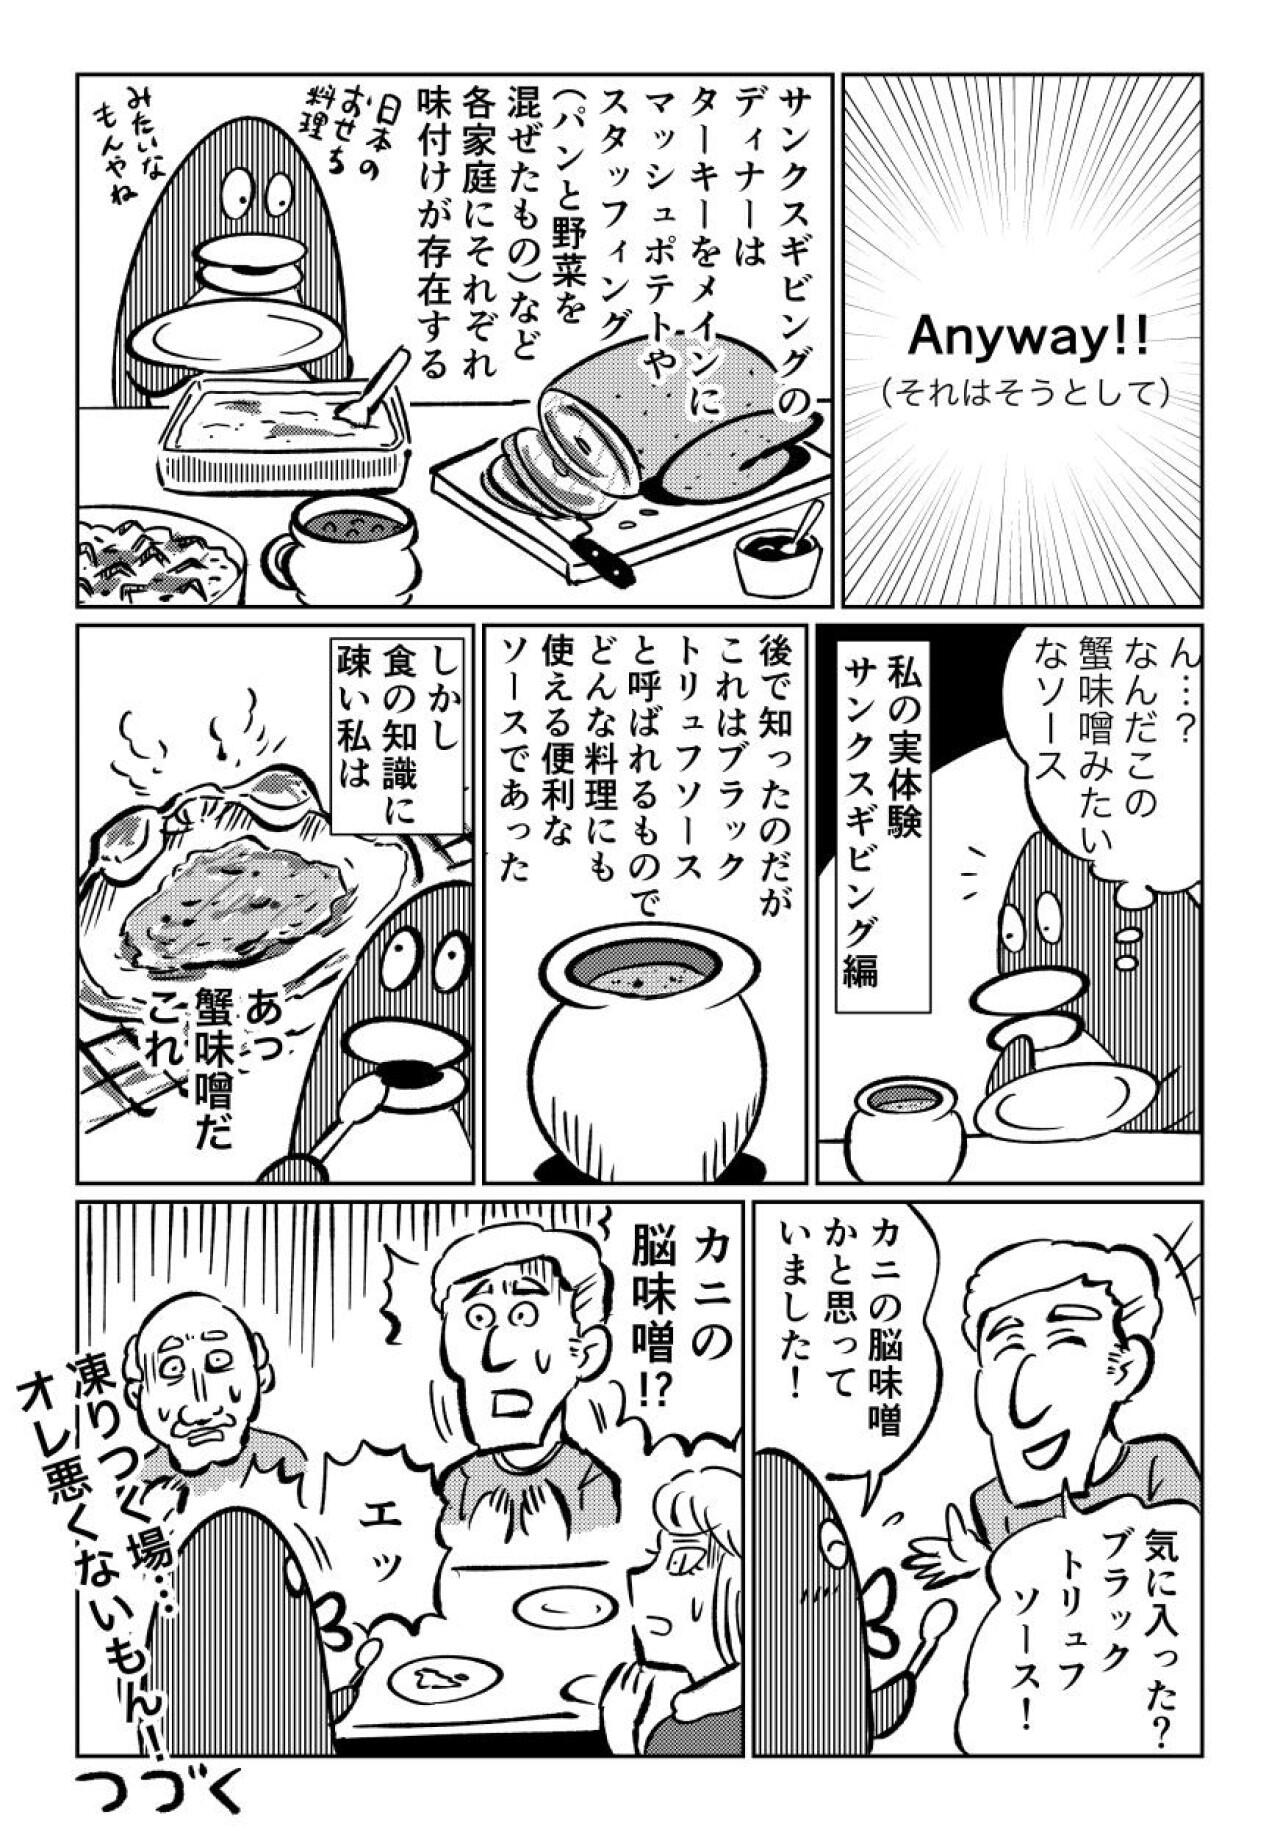 https://www.ryugaku.co.jp/column/images/34sai8_3_1280.jpg